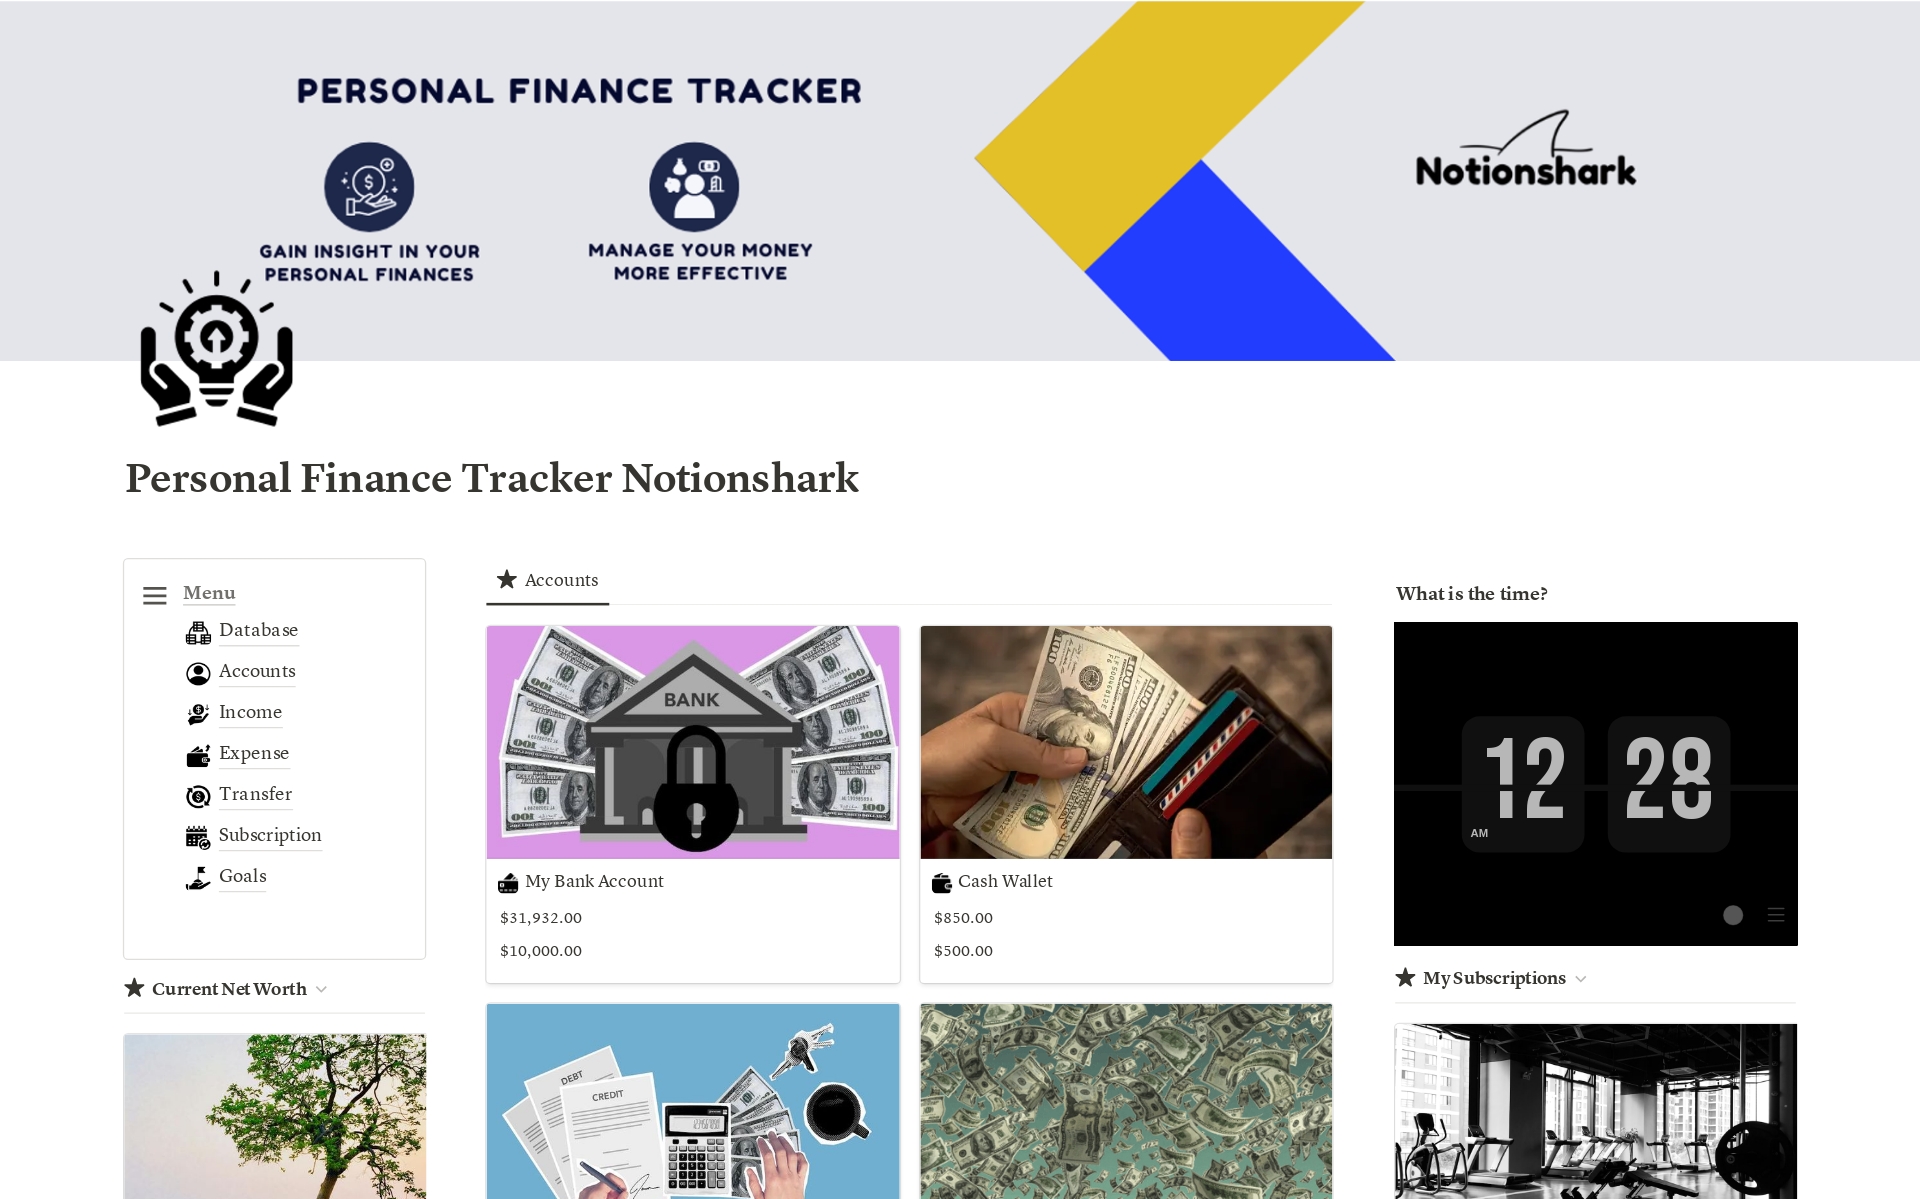 Vista previa de una plantilla para Personal Finance Tracker Notionshark